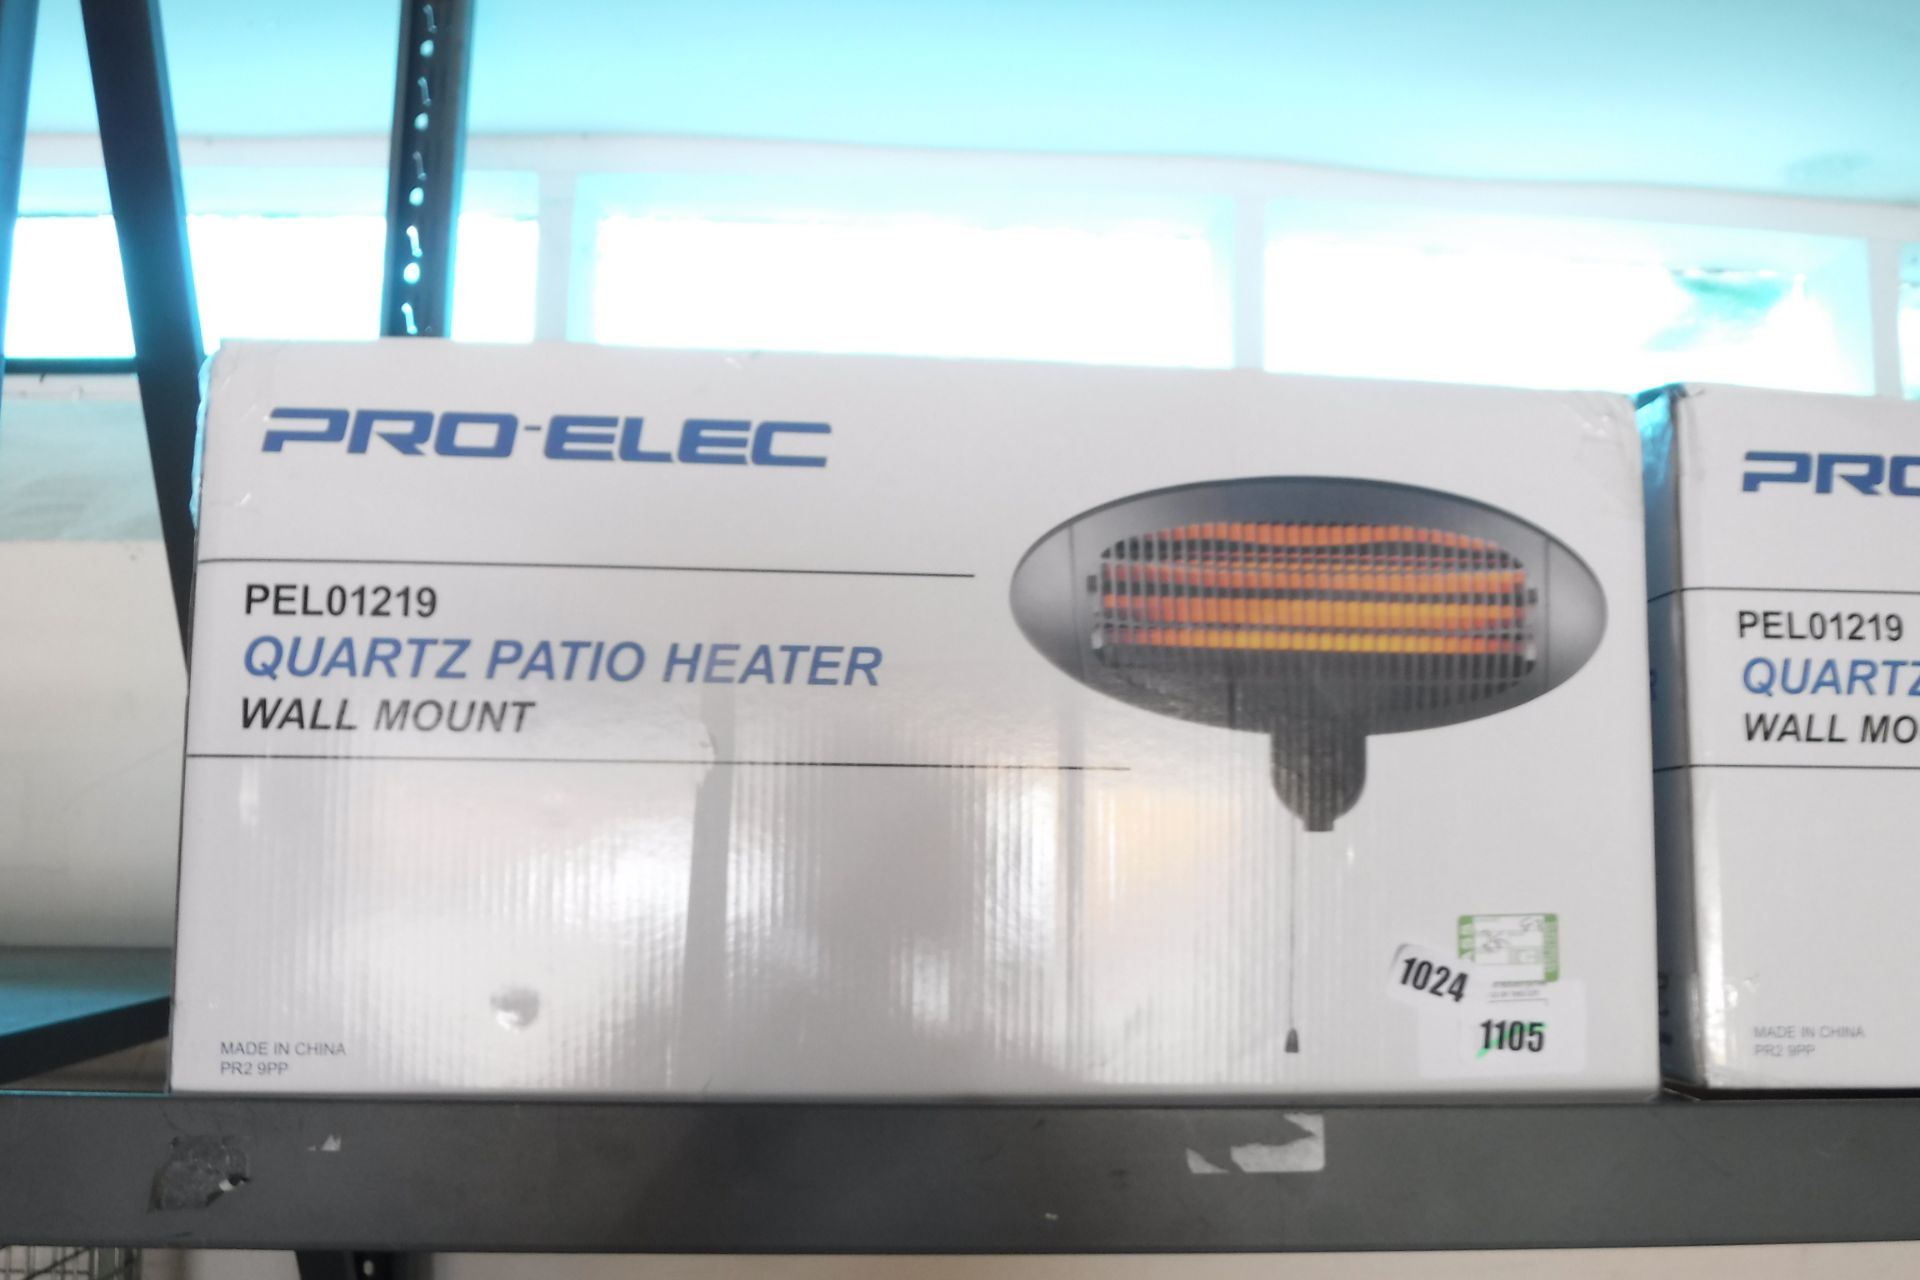 (1105) Pro Elec quartz patio heater